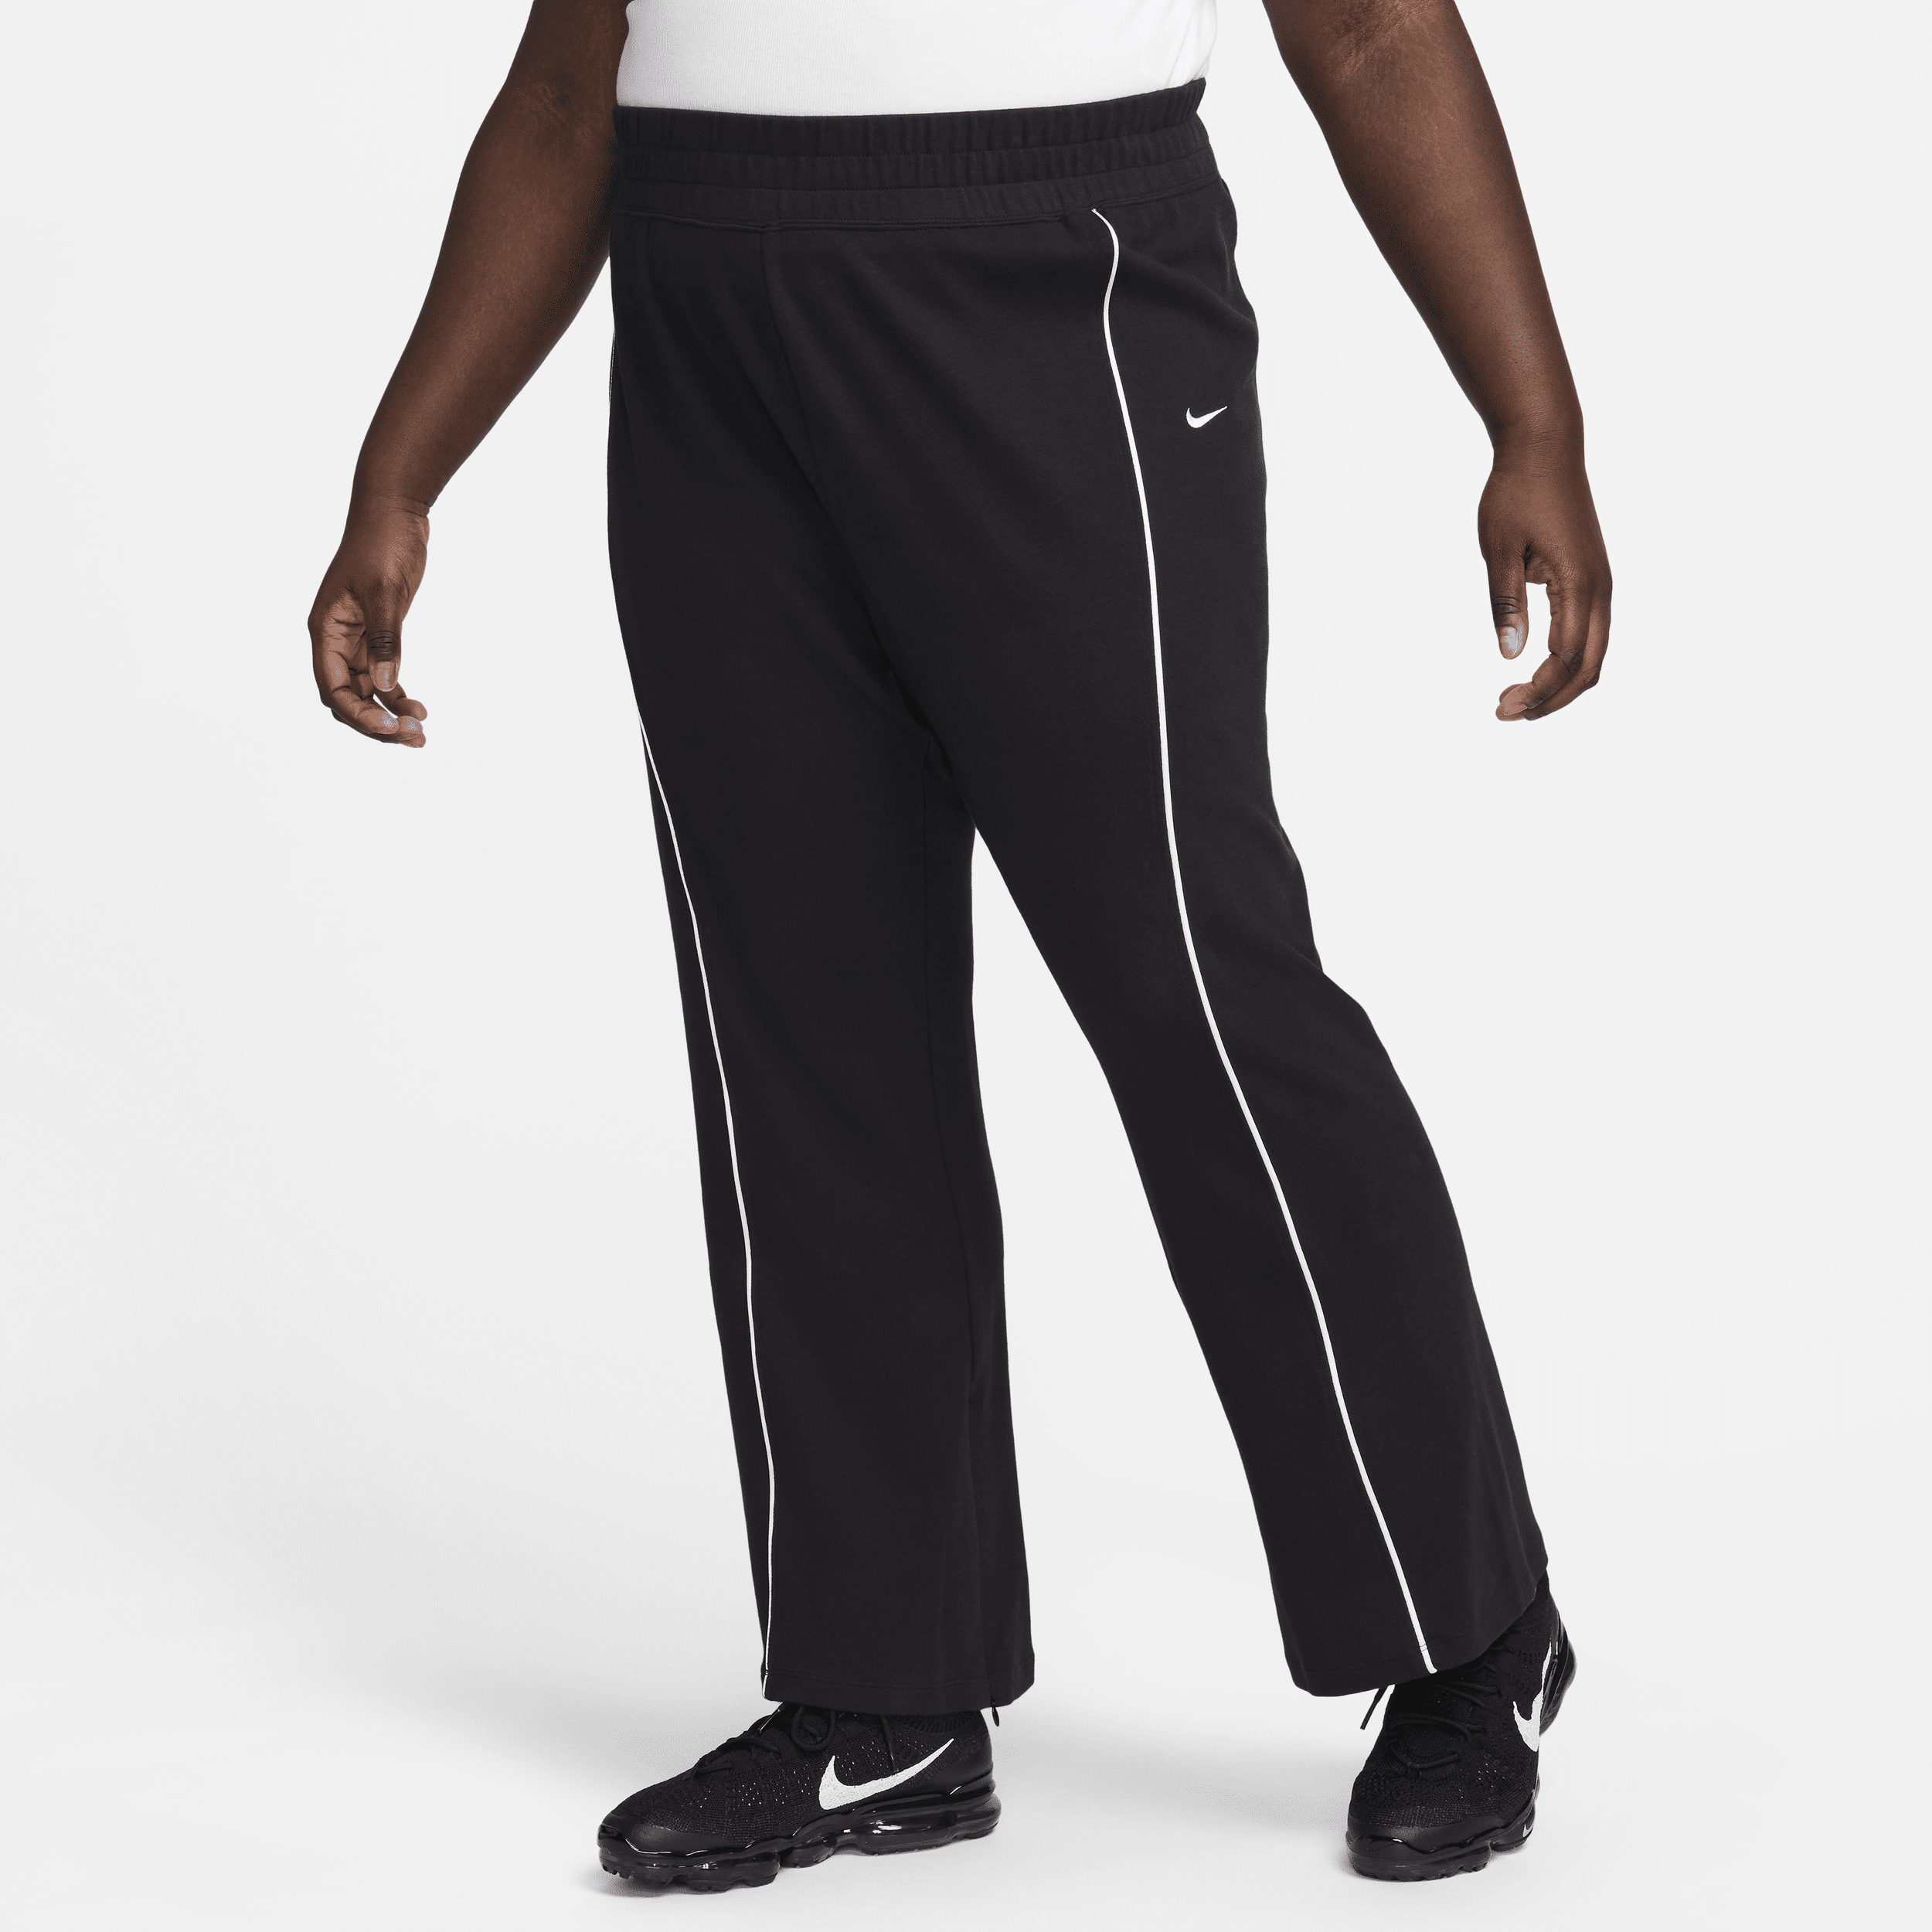 Pantalon a ourlet fendu Nike Sportswear Collection pour femm